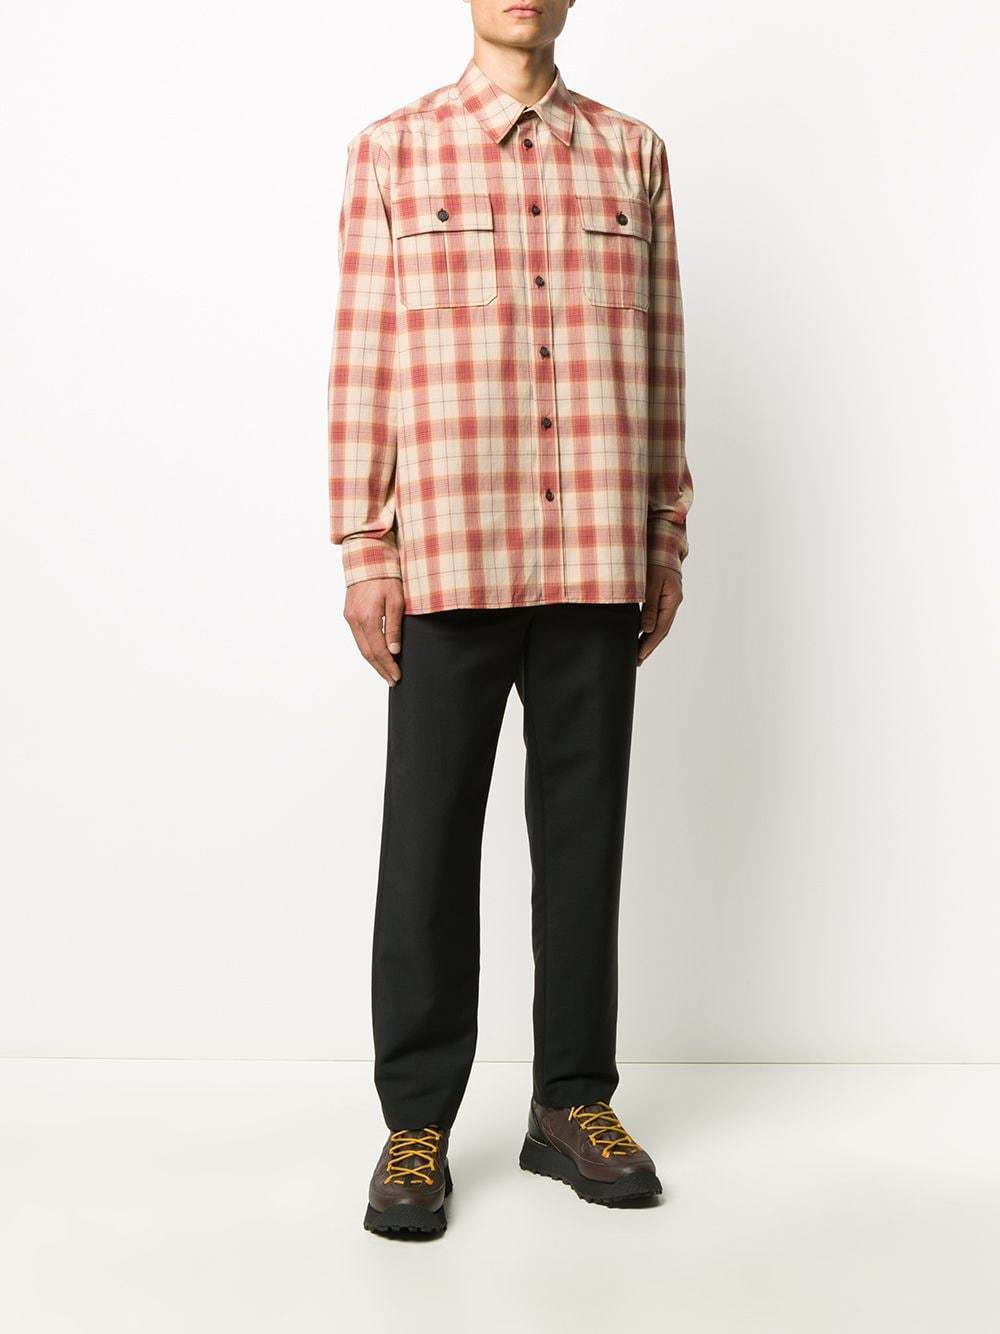 Acne Studios Oversized Checked Flannel Shirt, $252 | farfetch.com ...